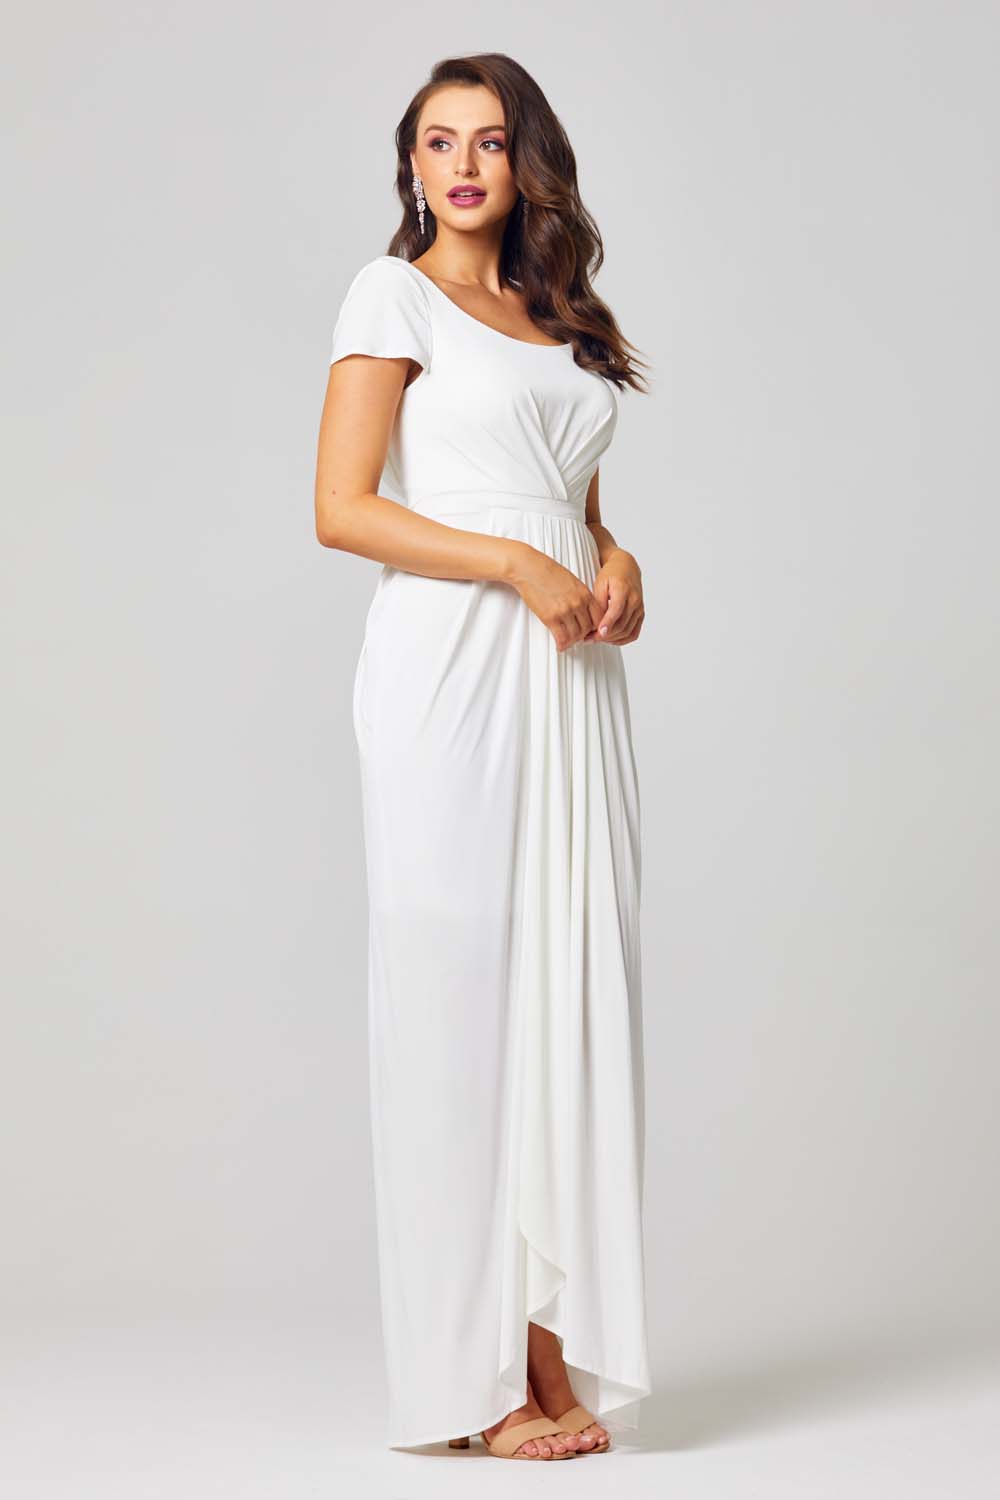 GLORIA TO804 Bridesmaids dress by Tania Olsen Designs